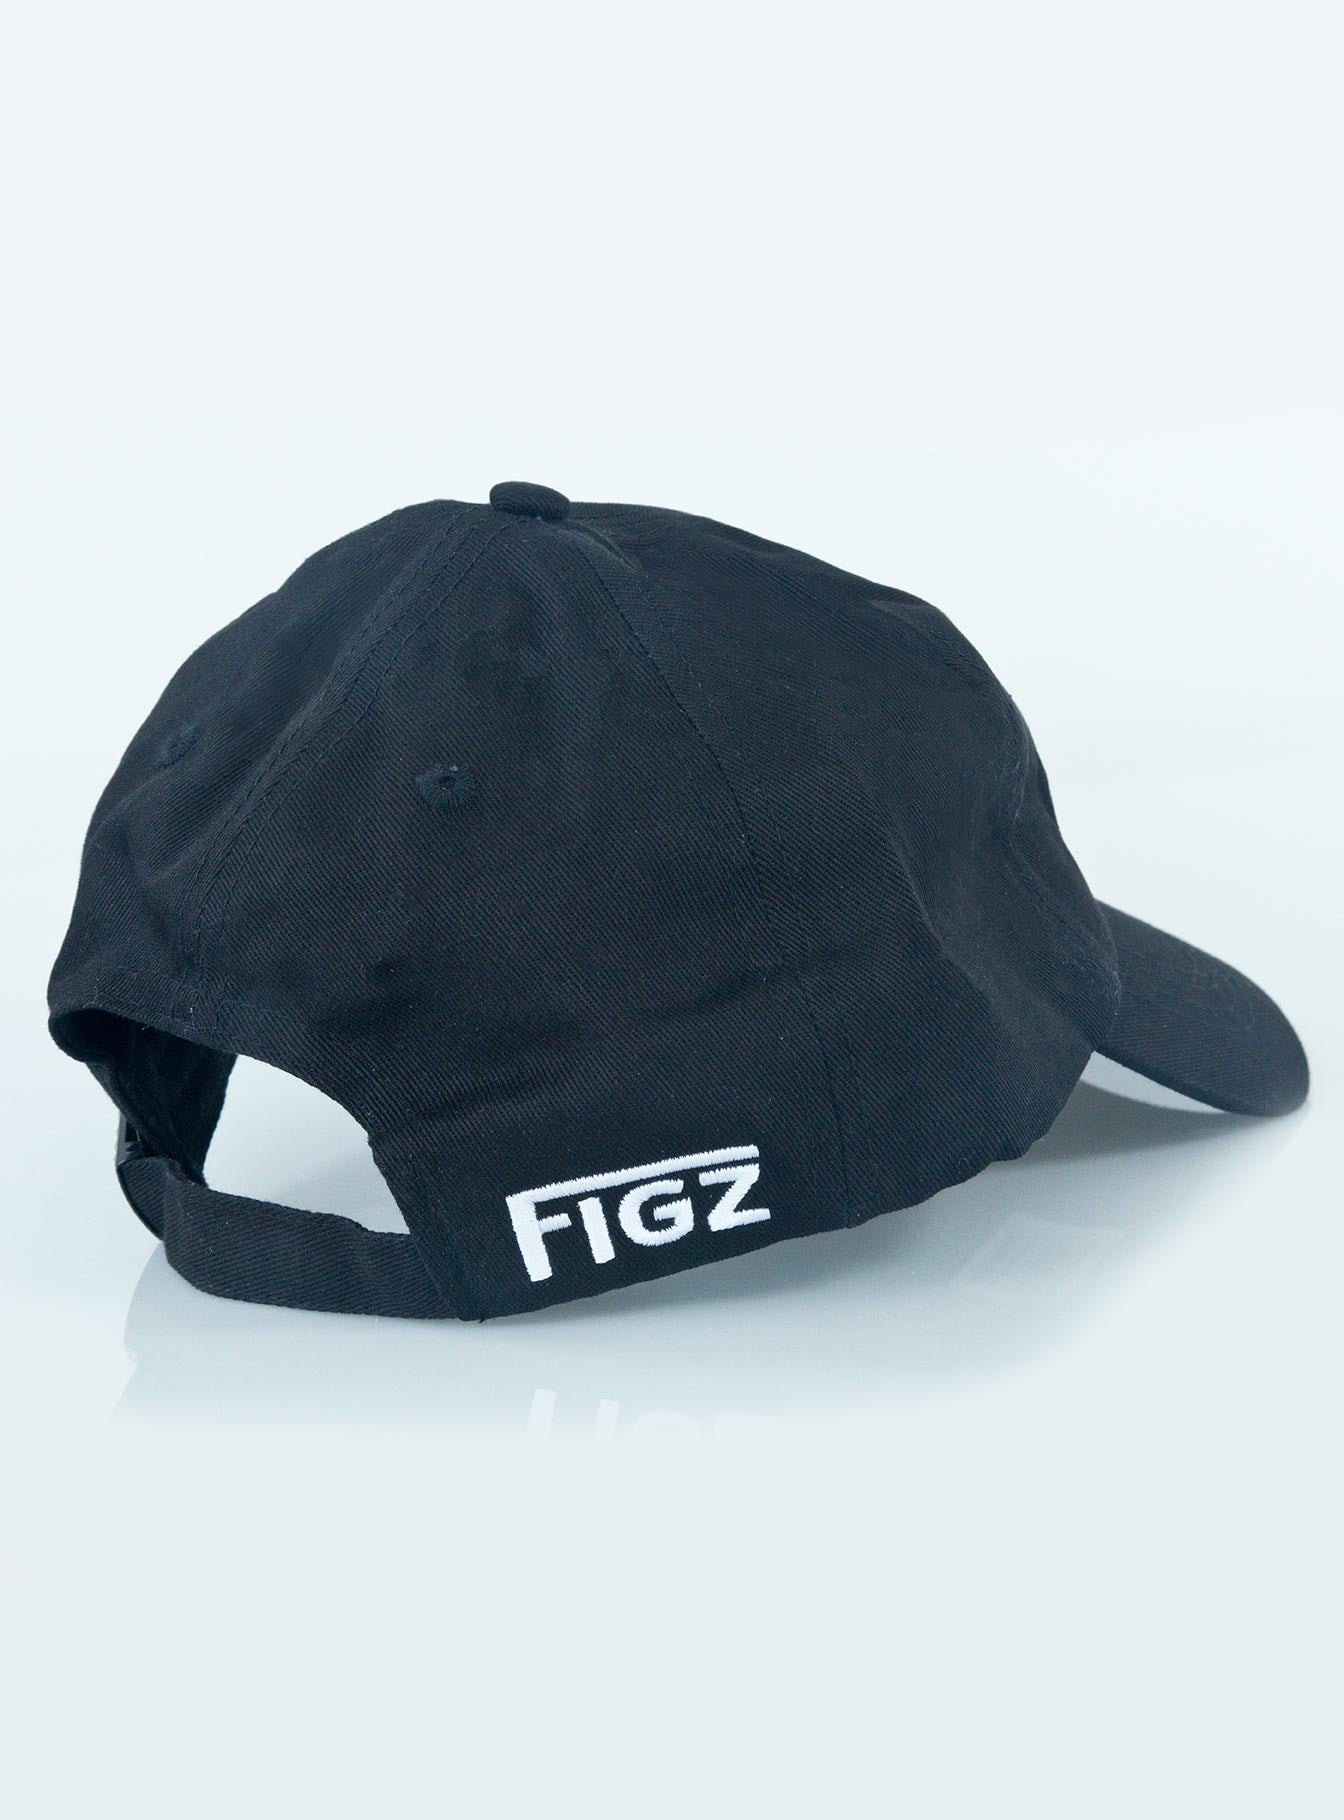 Figz Dad Hat | Polarbear